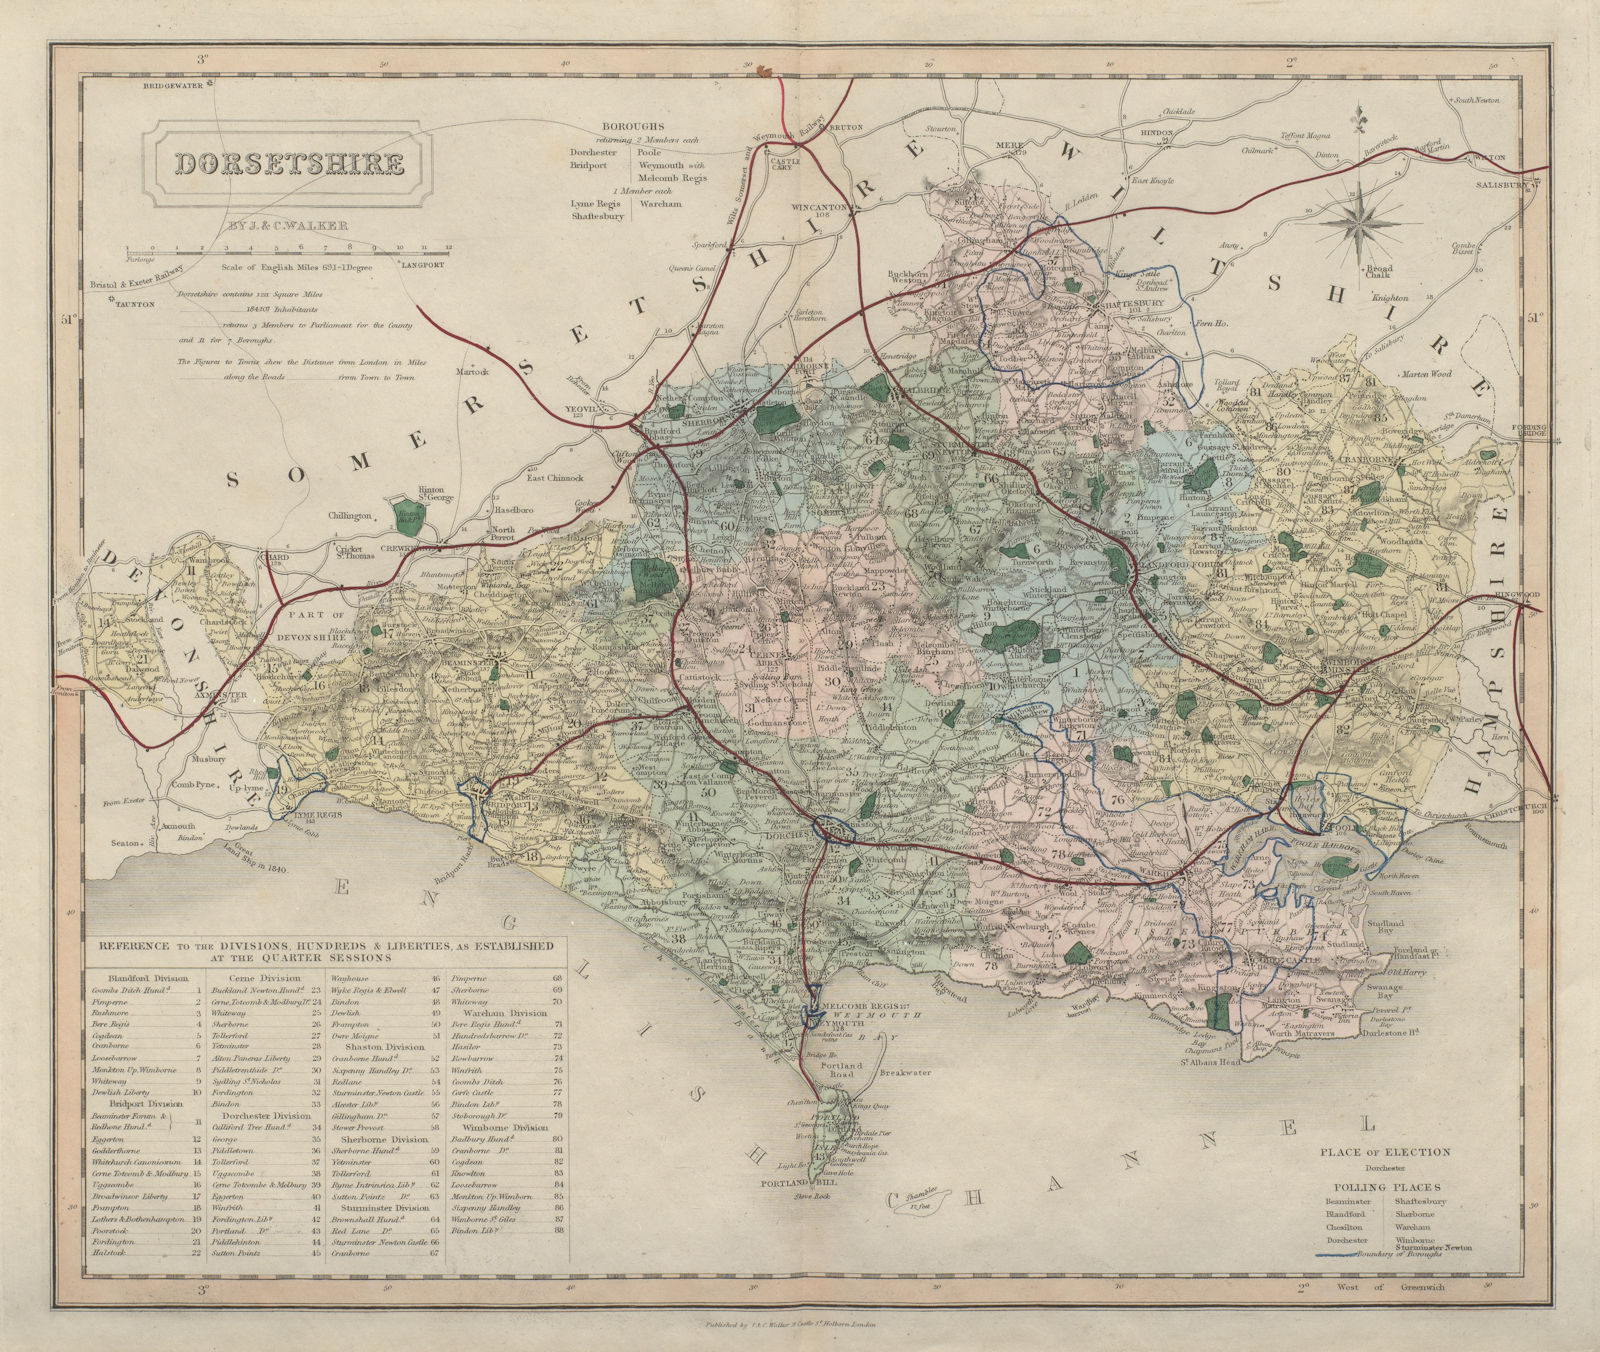 Associate Product Dorsetshire antique county map by J & C Walker. Railways & boroughs 1868